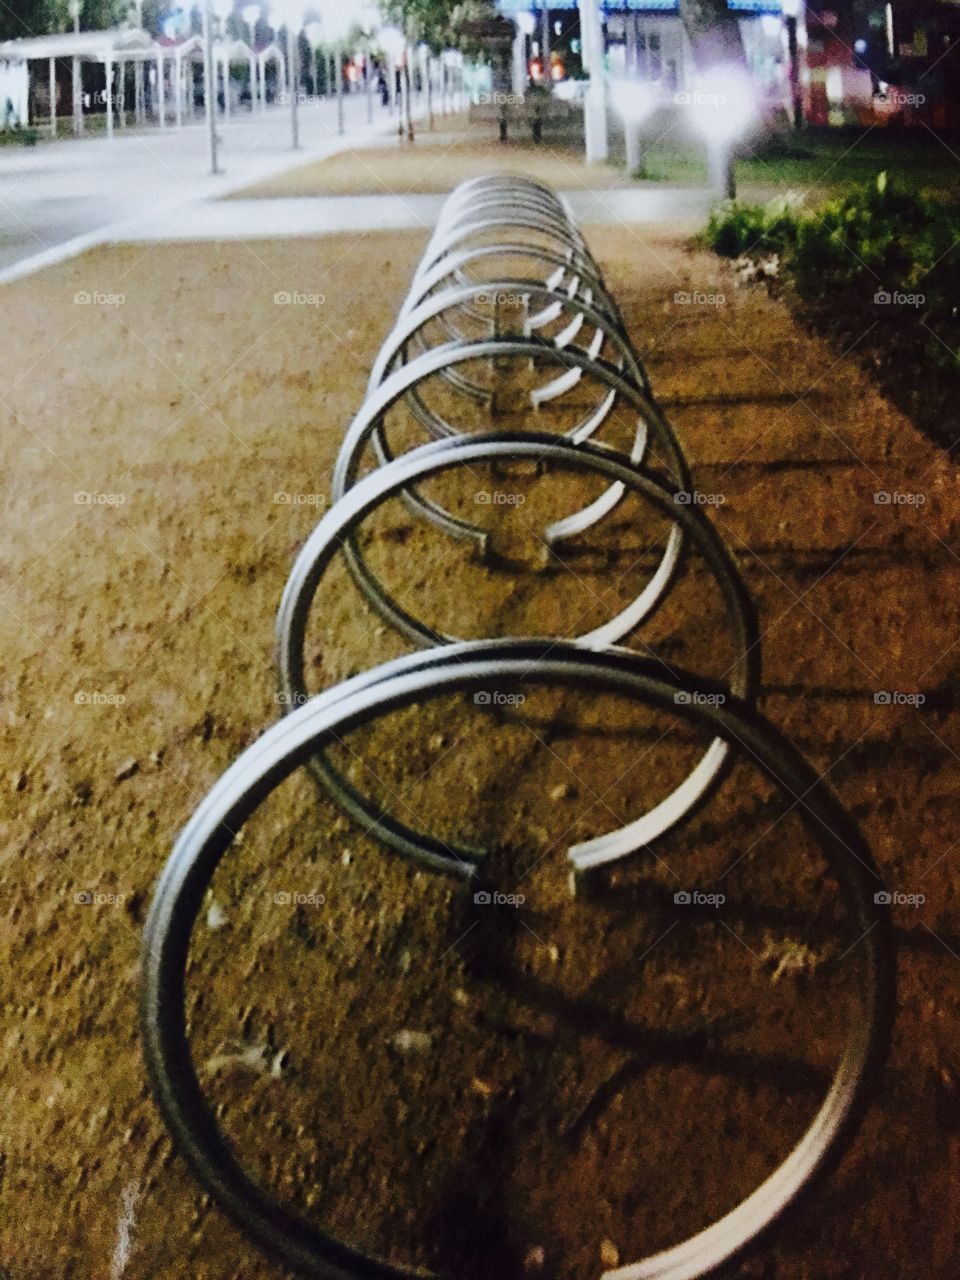 Bike Rack in Houston. Closeup of bike rack rings in Houston 